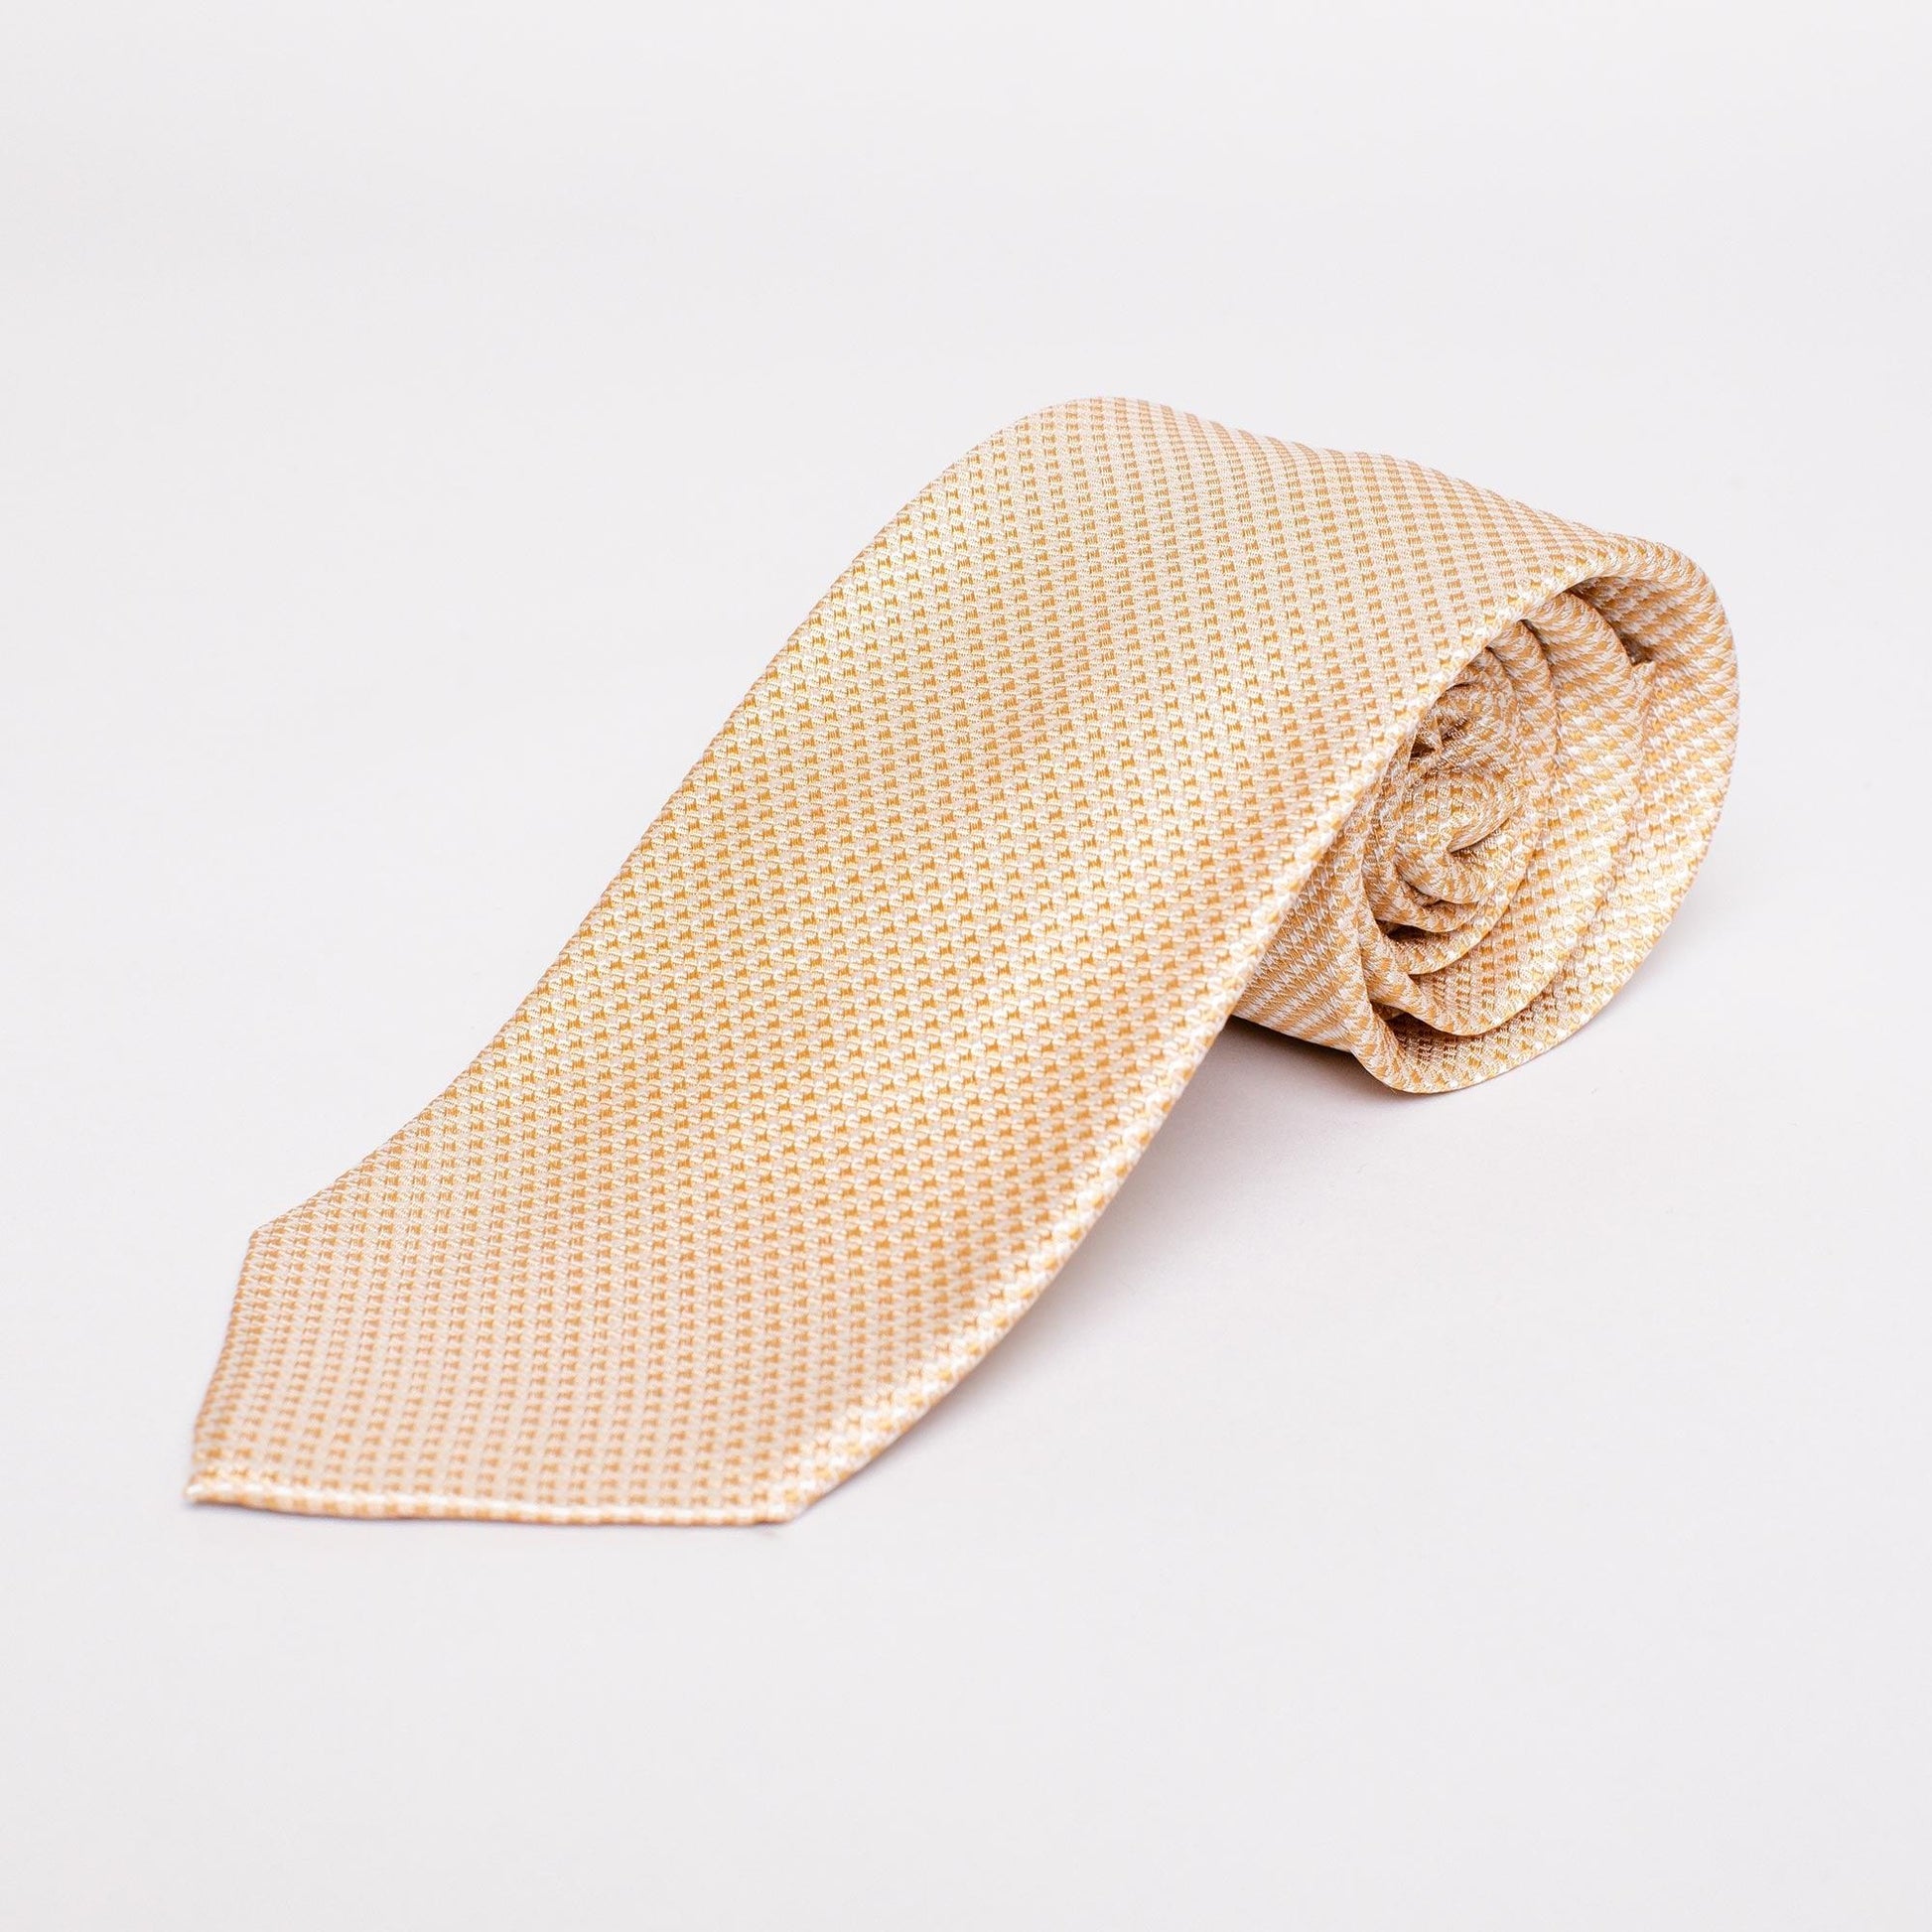 Krawatte Struktur Gelbgold - JUCAN GmbH